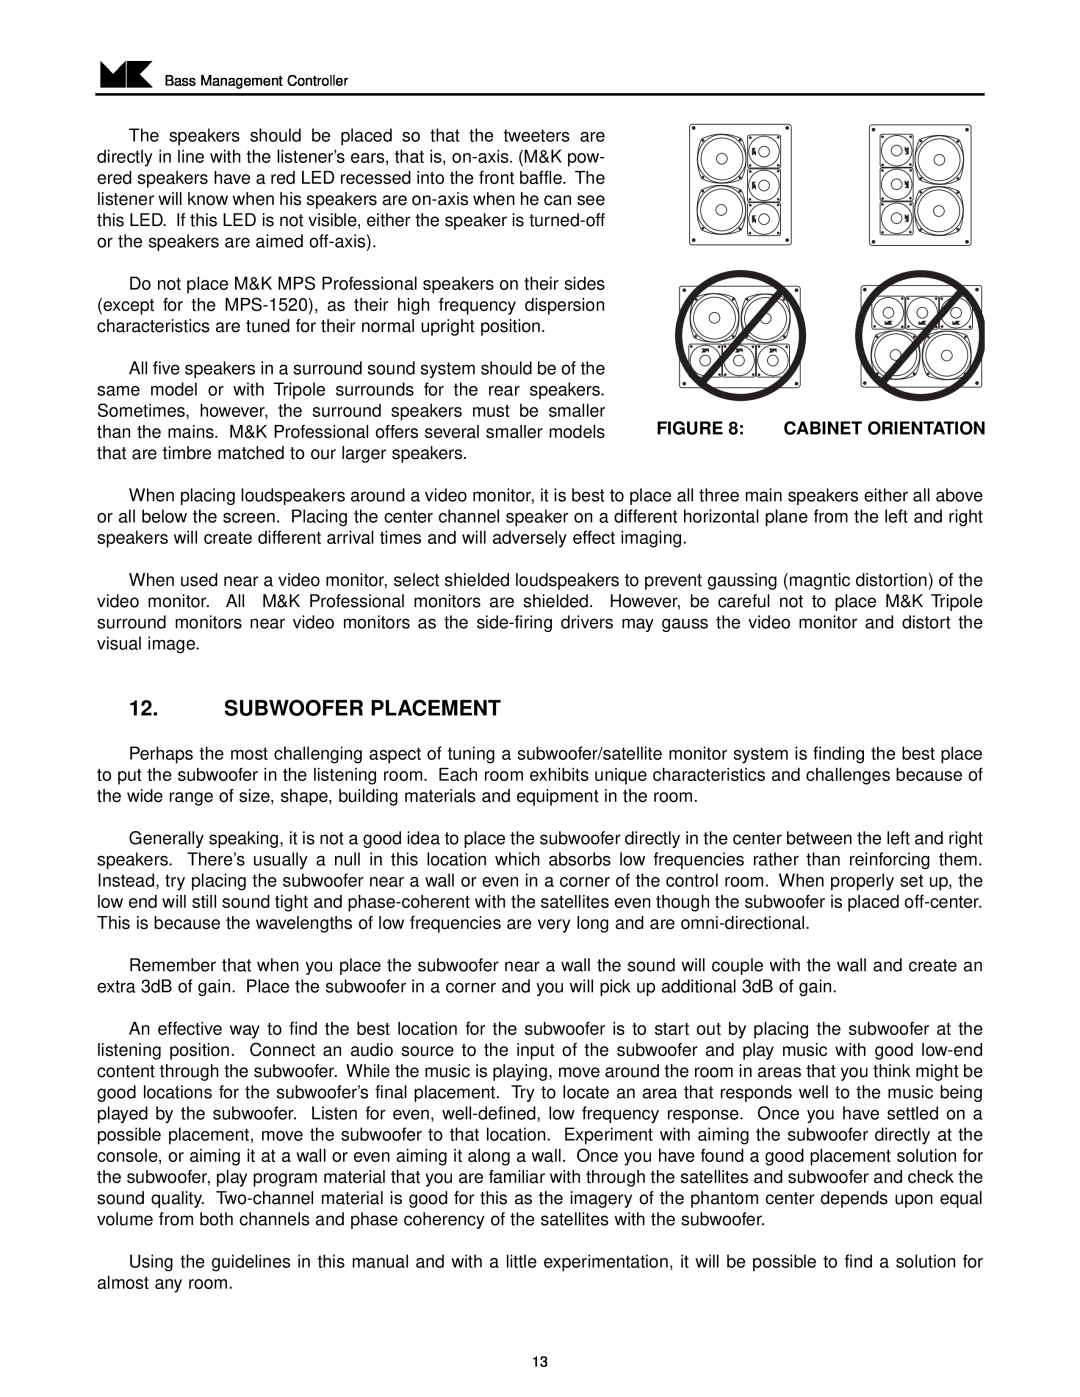 MK Sound LFE-4 operation manual Subwoofer Placement, Cabinet Orientation 